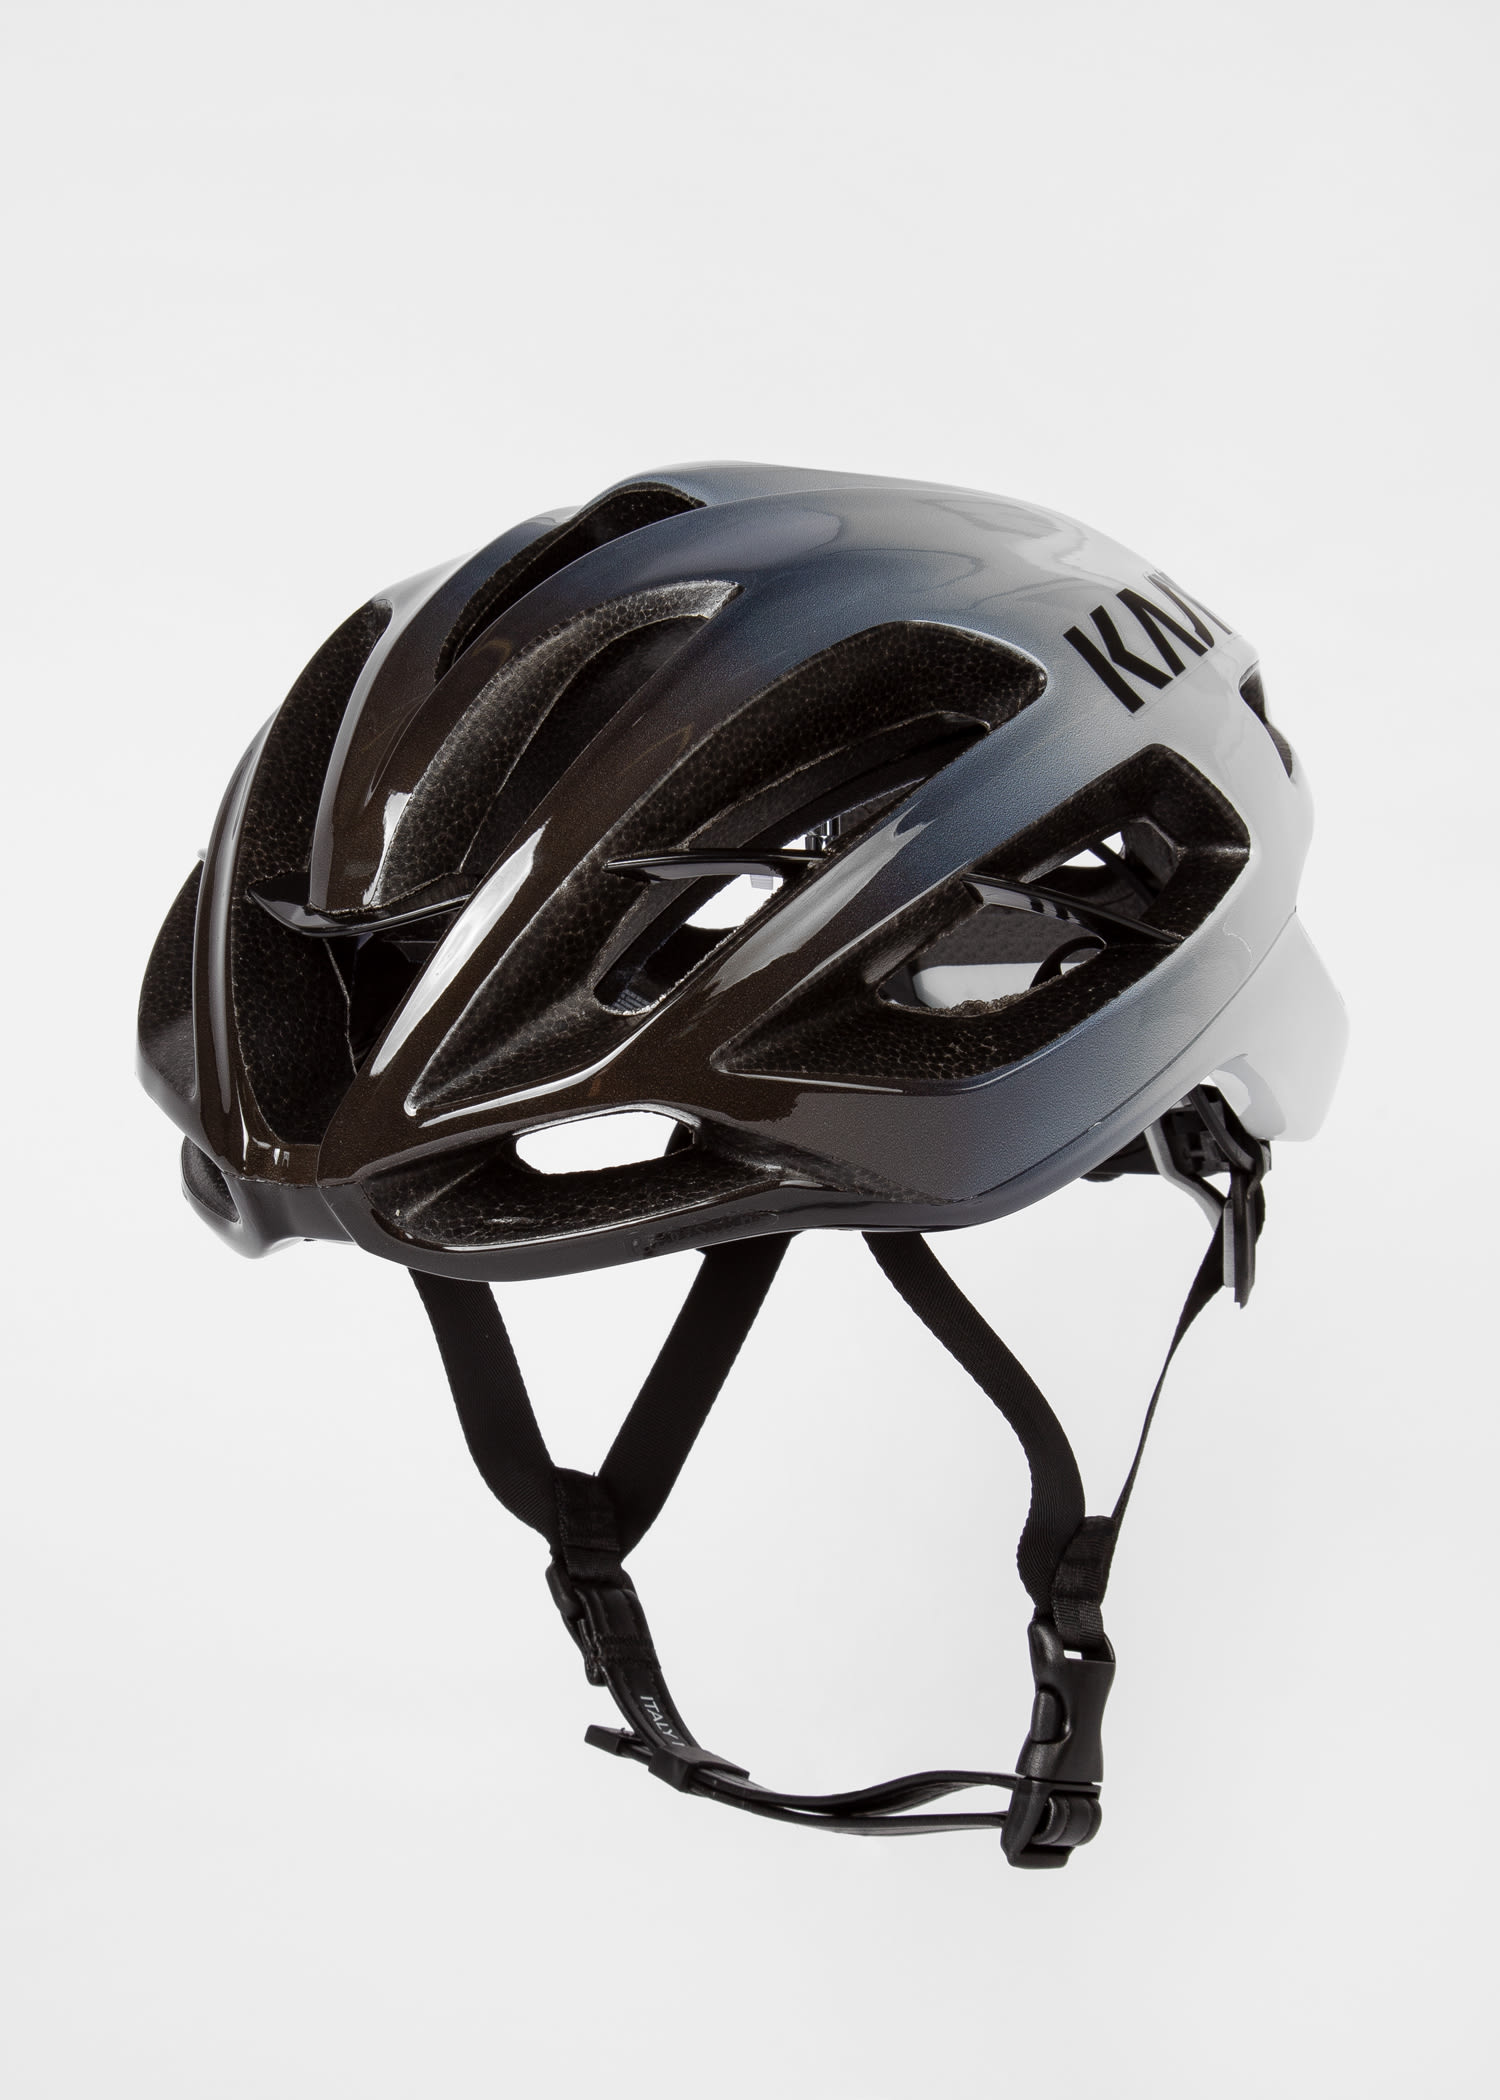 Paul Smith + Kask 'Monochrome Fade' Protone Cycling Helmet - Paul Smith